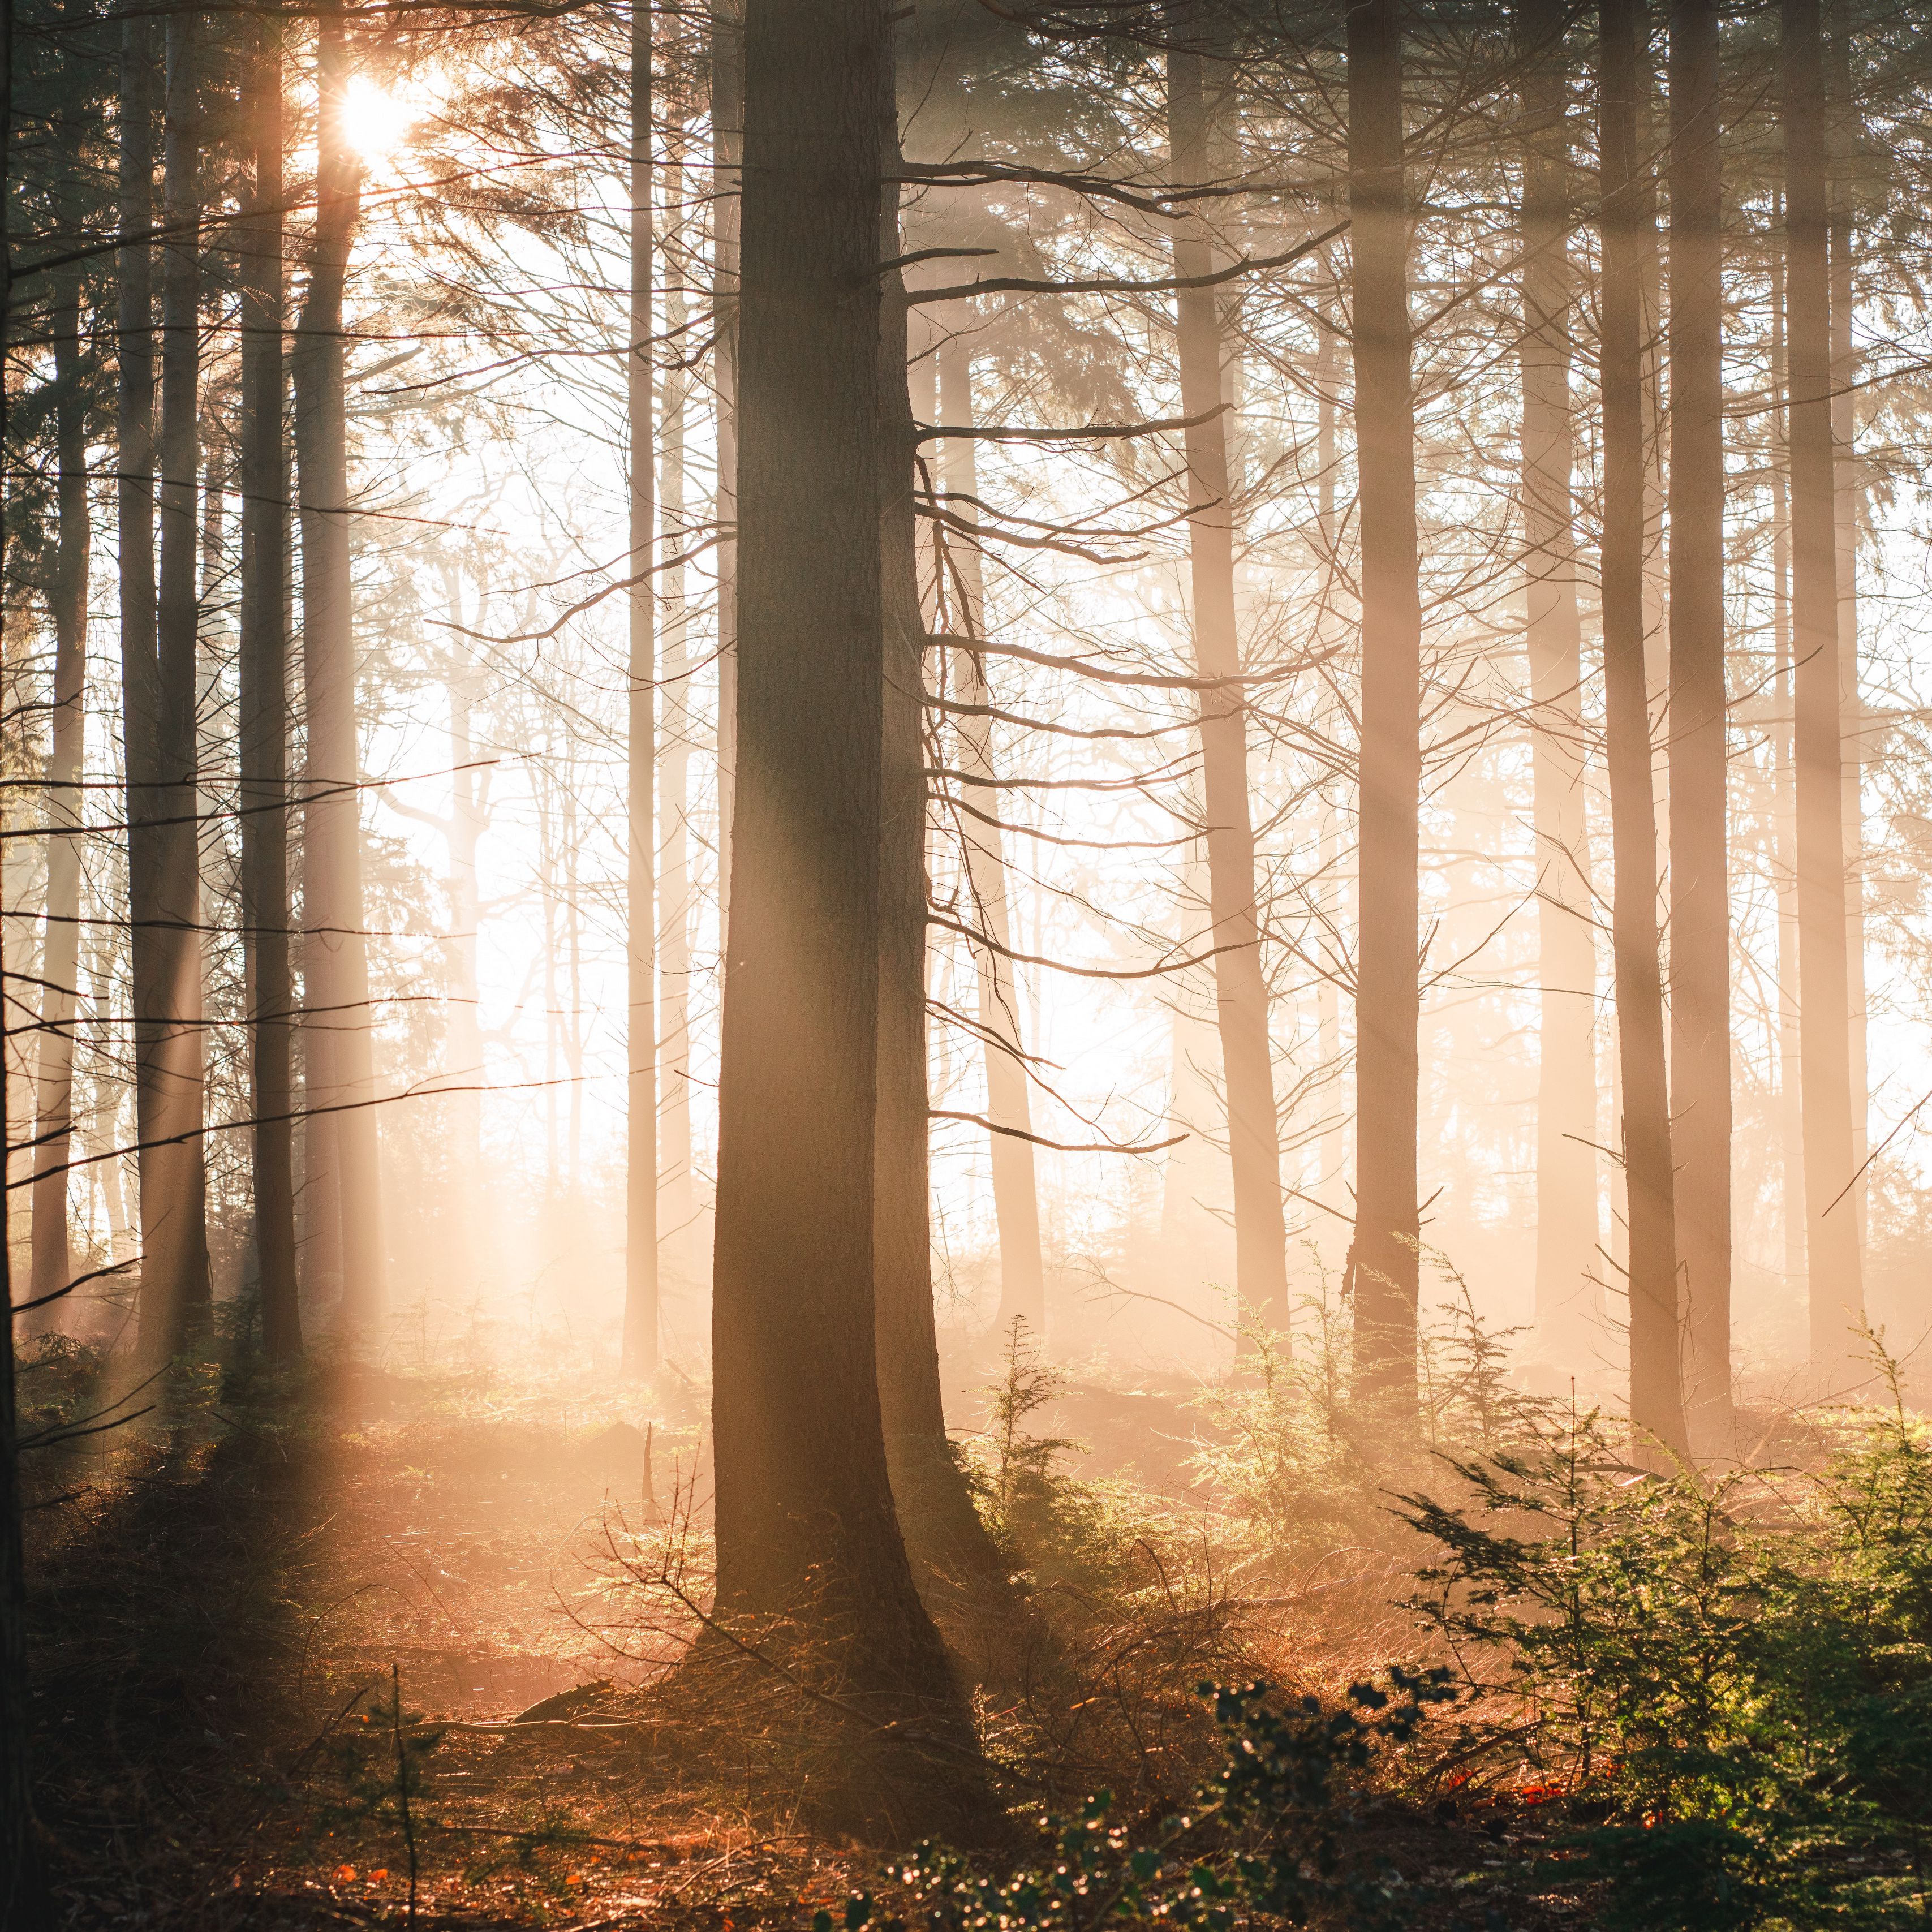 Лес солнце и звезды. "Солнце в лесу". Лучи солнца в лесу. Солнечный лес. Красивые картинки.